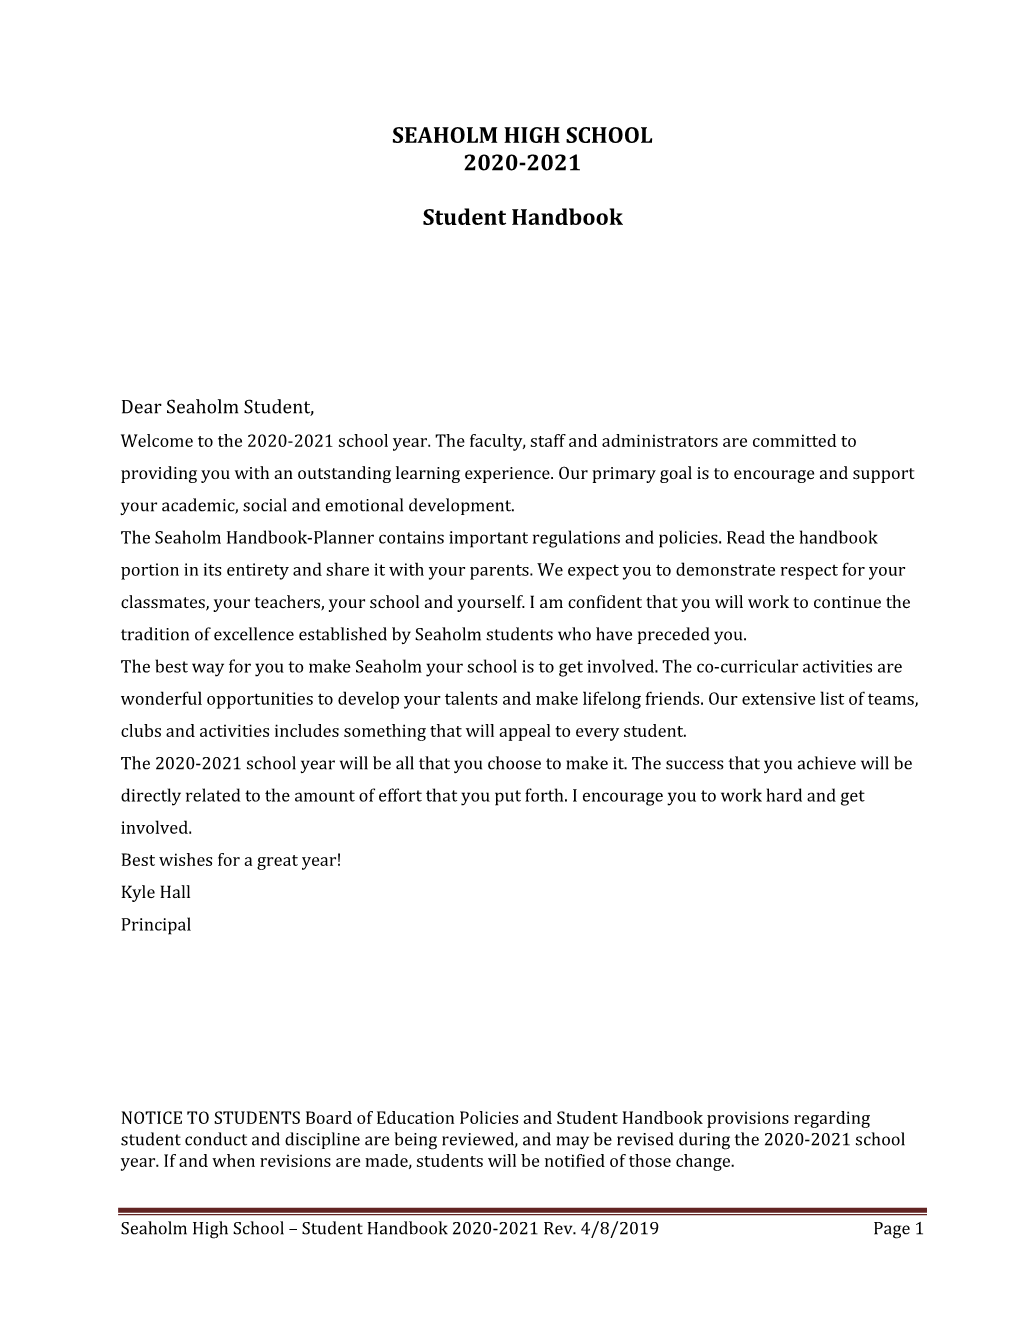 SEAHOLM HIGH SCHOOL 2020-2021 Student Handbook